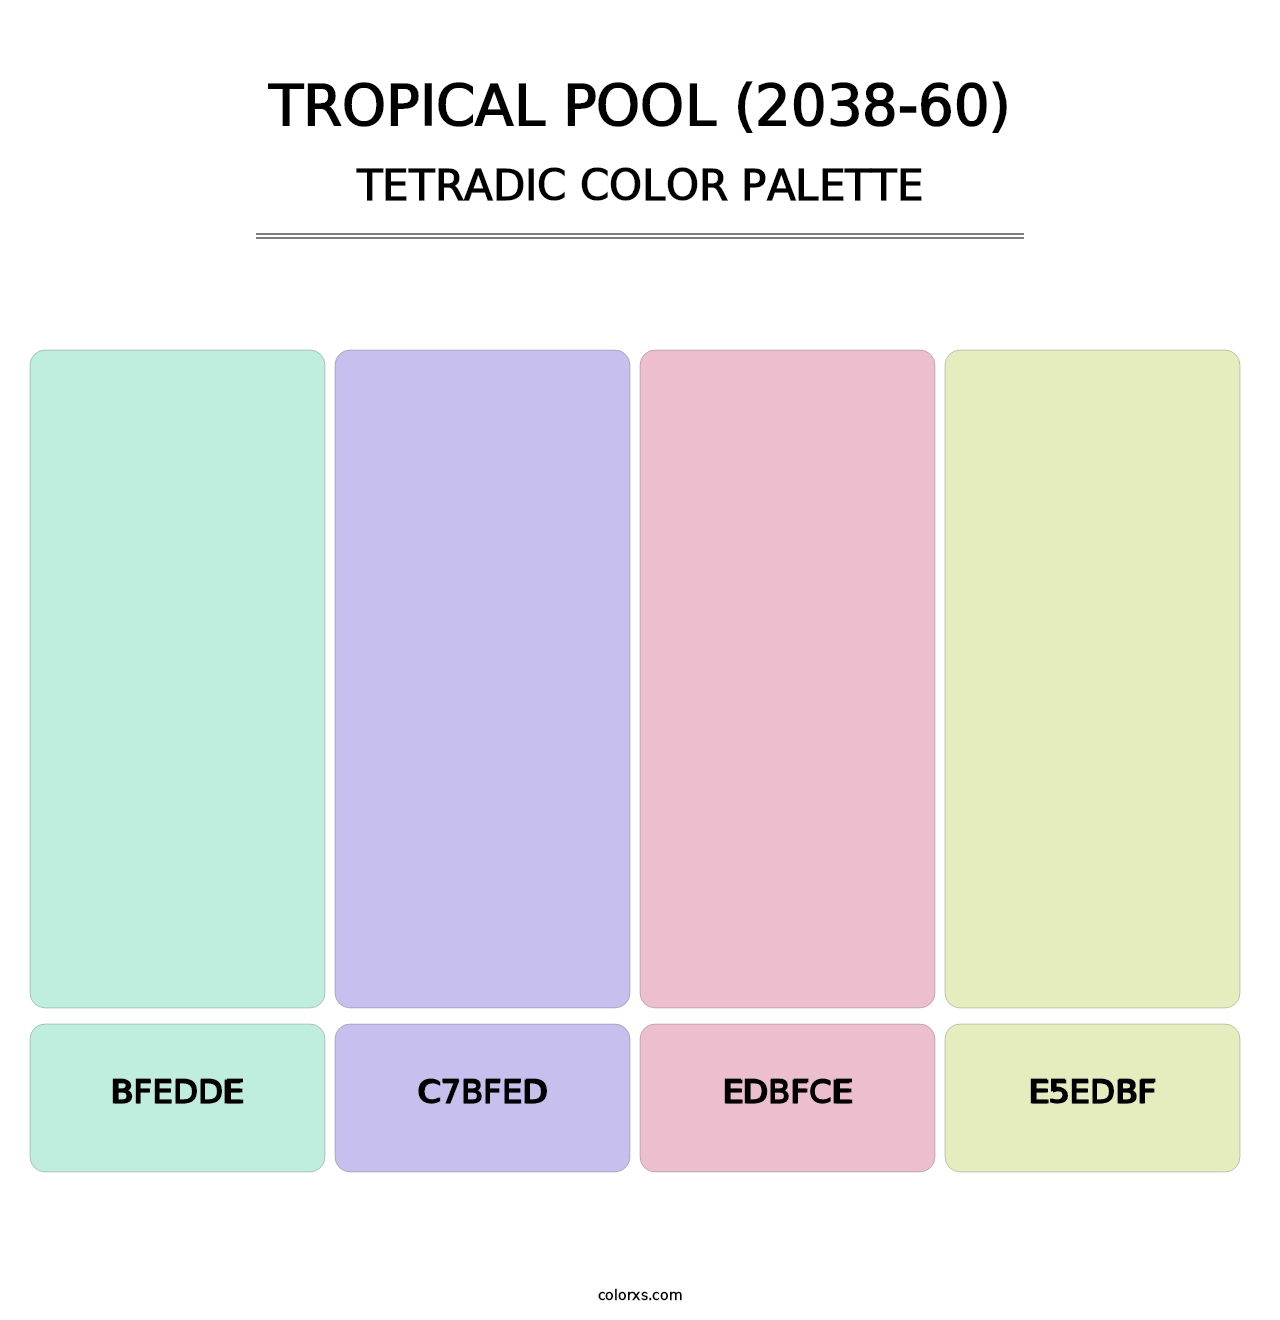 Tropical Pool (2038-60) - Tetradic Color Palette